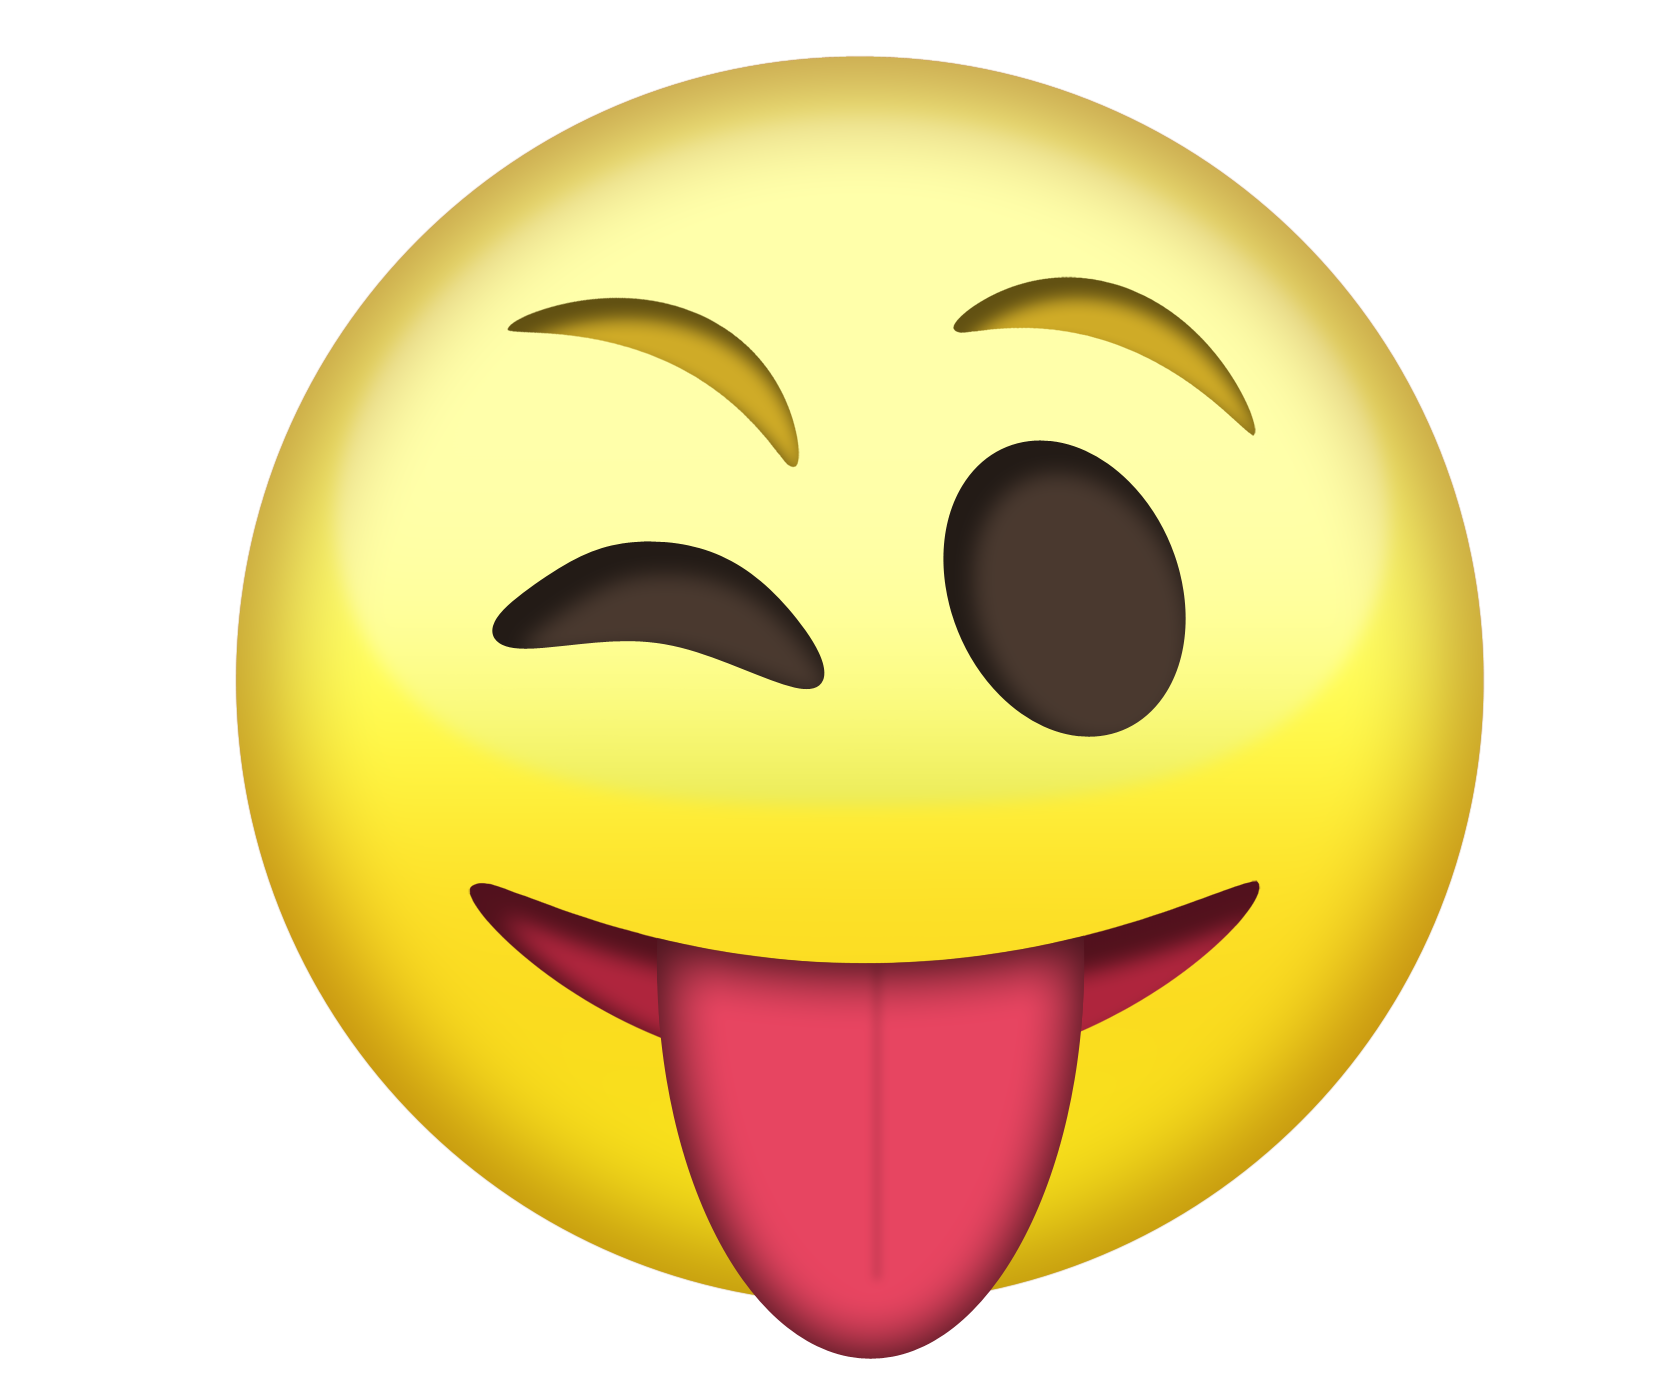 Head Emoji HQ Image Free PNG Image